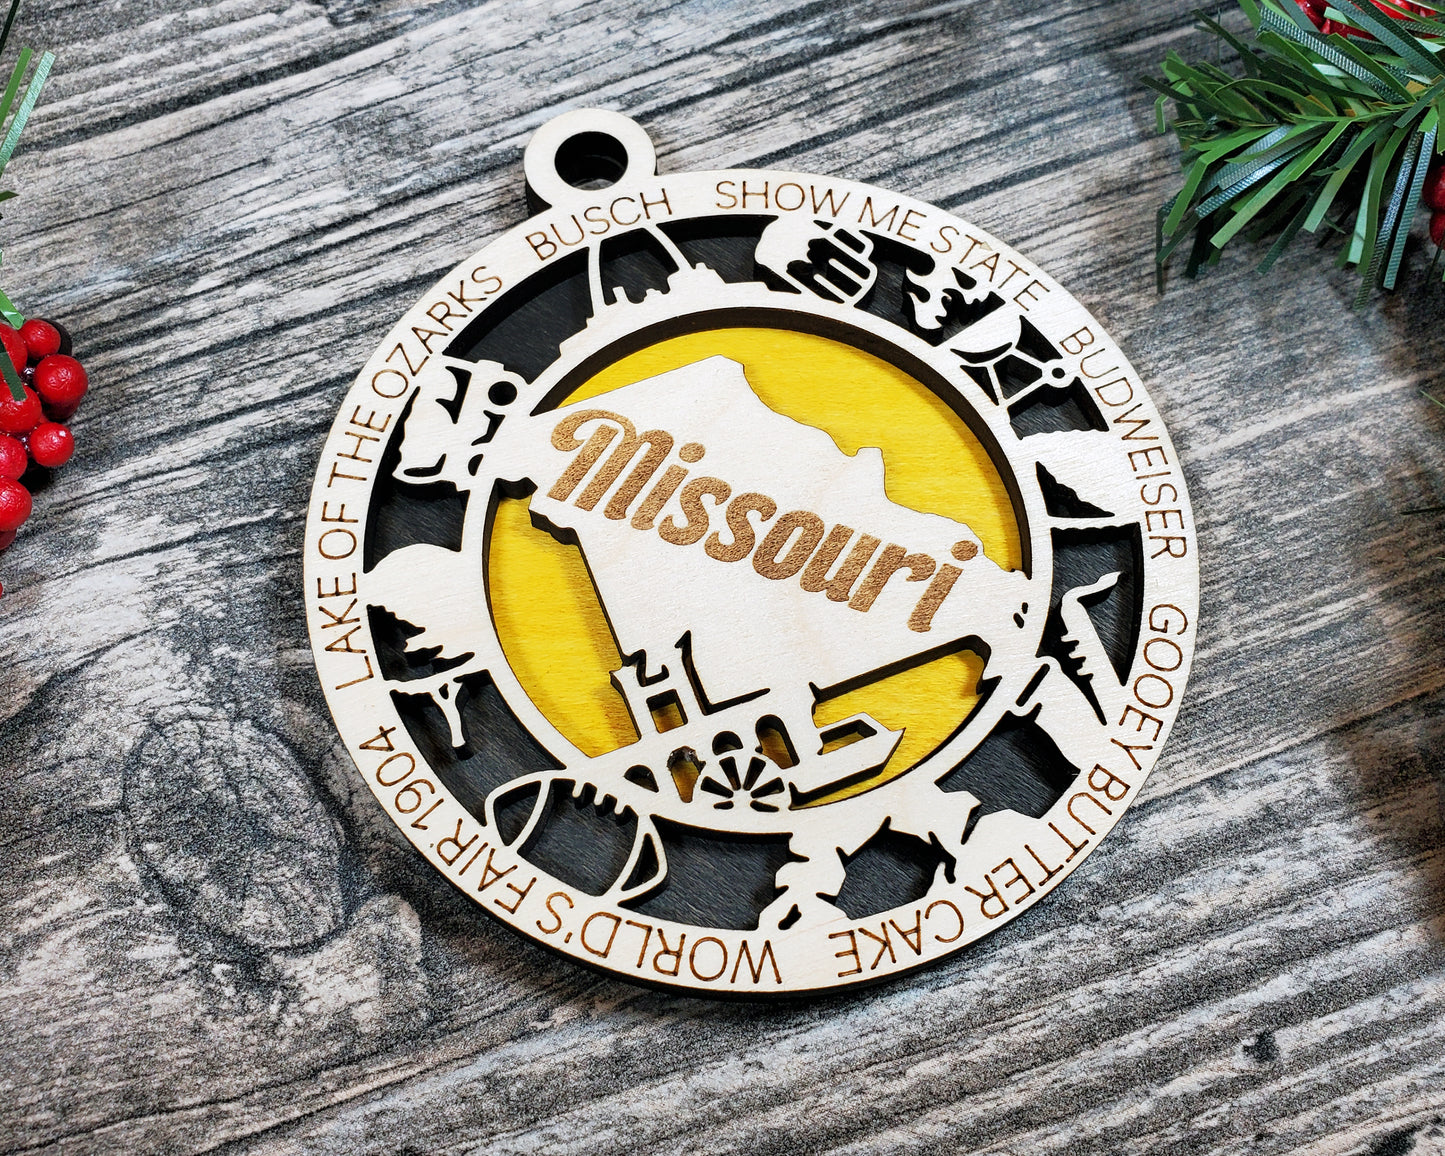 Missouri Ornament